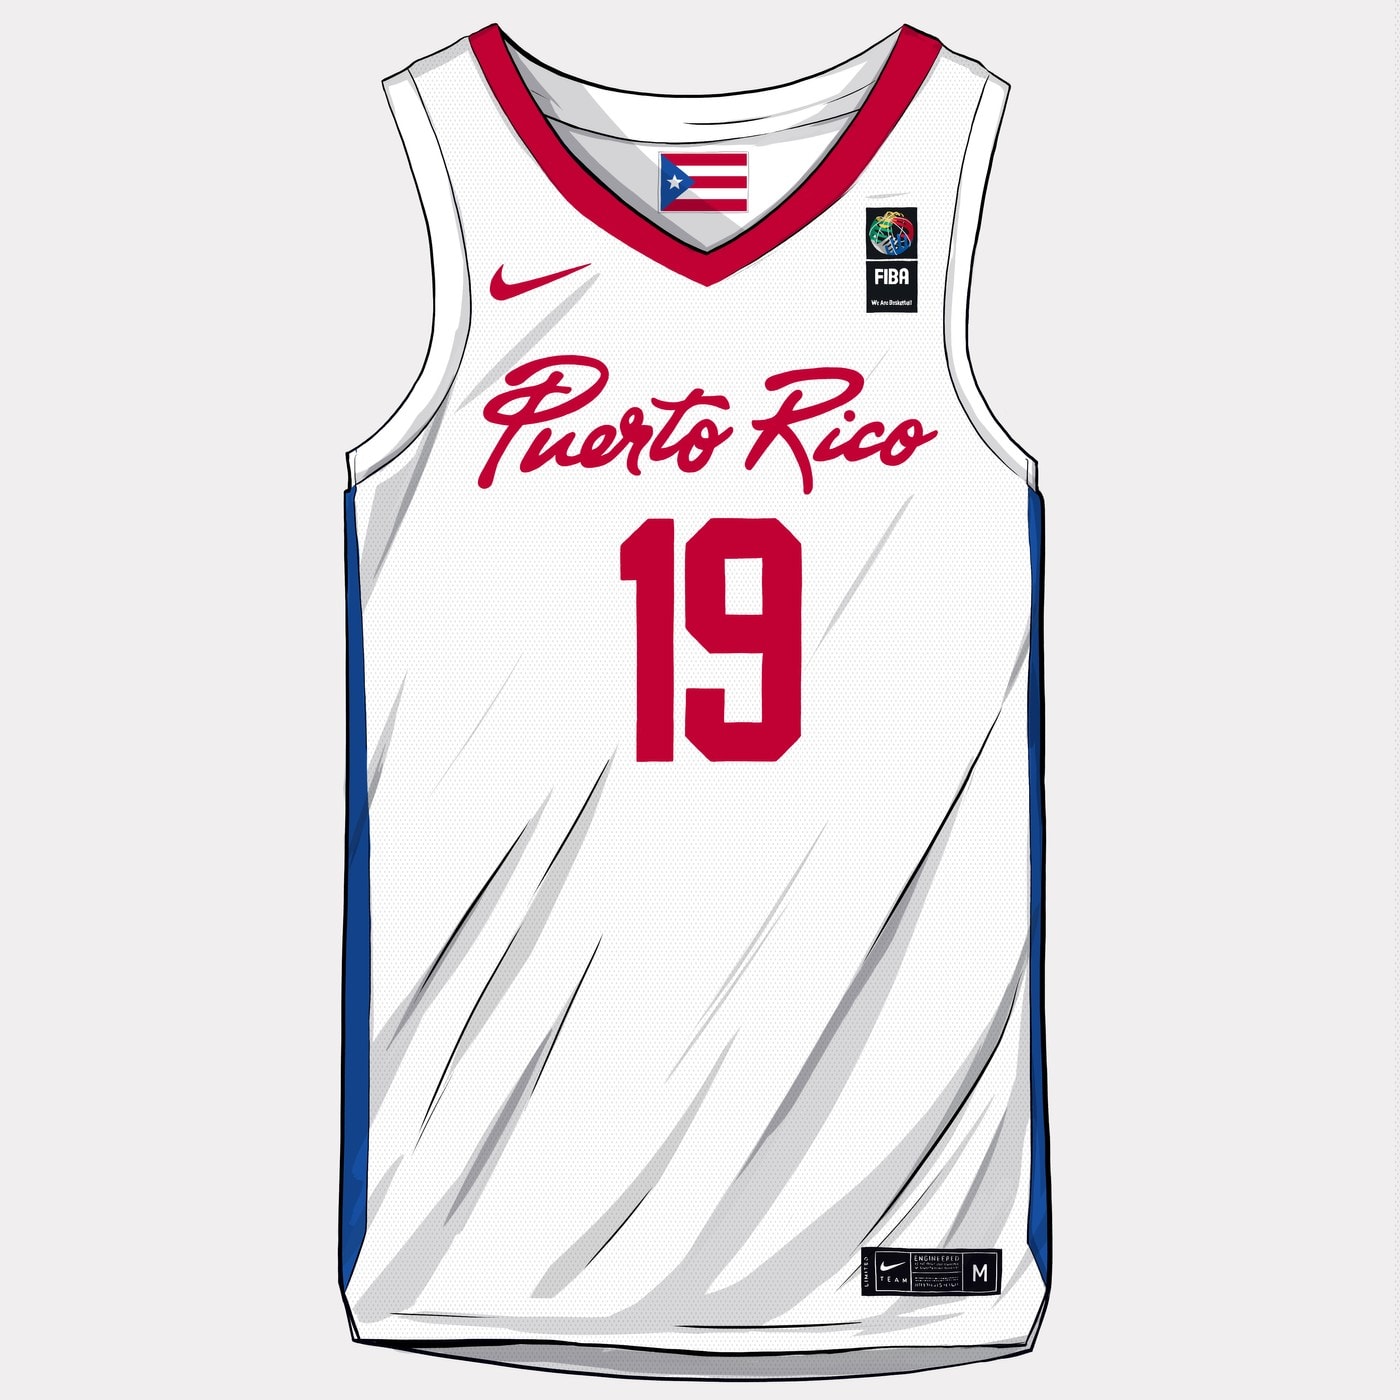 Nike 與 Jordan Brand 正式發表 2019 年籃球國家隊隊服